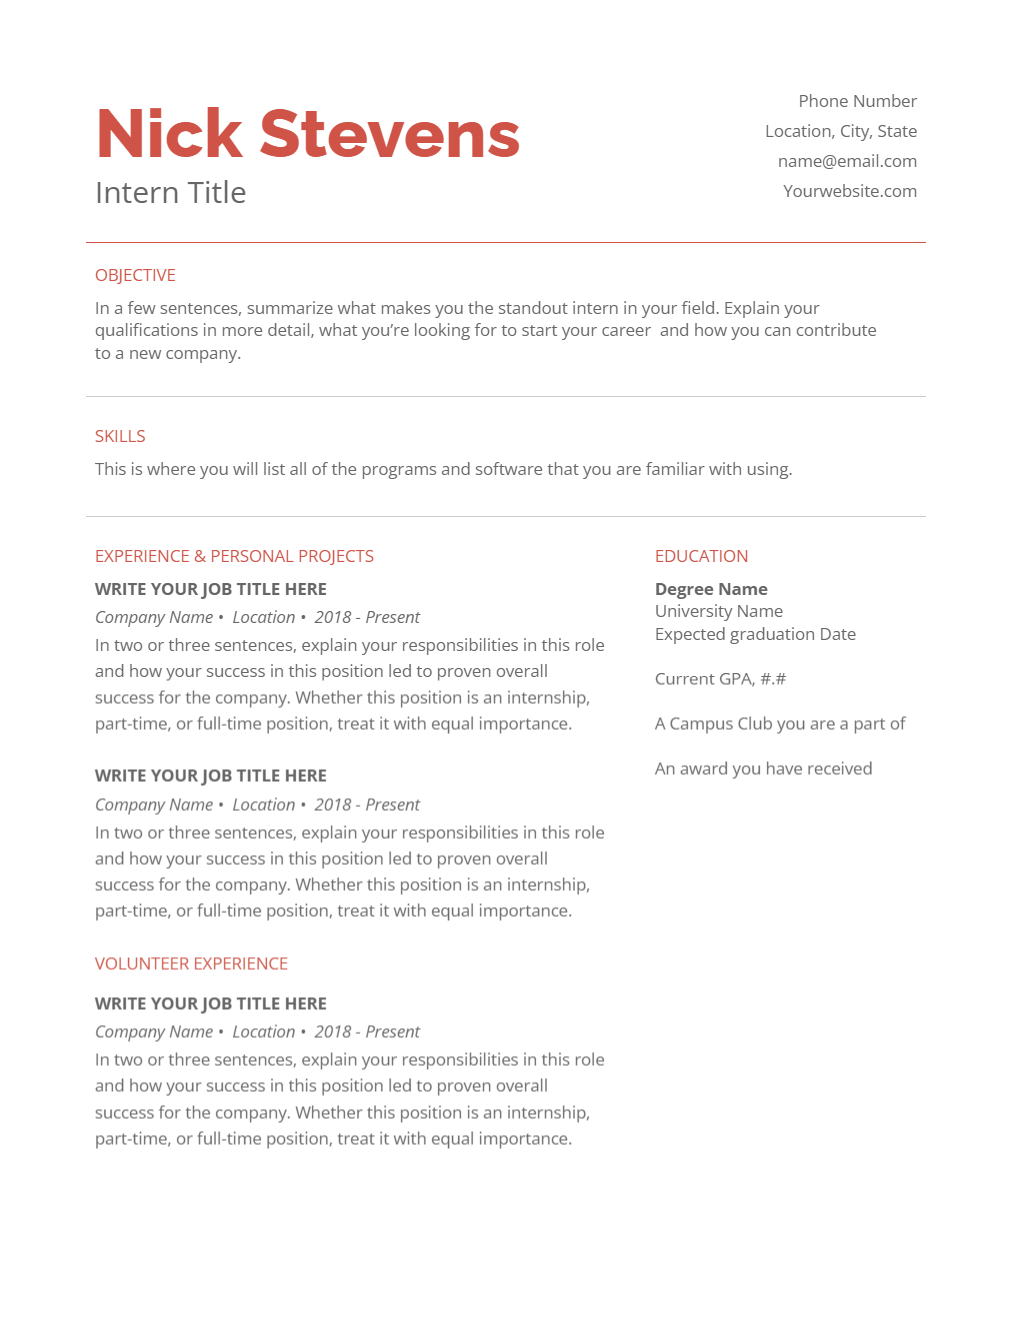 call center resume examples, call center resume for interns